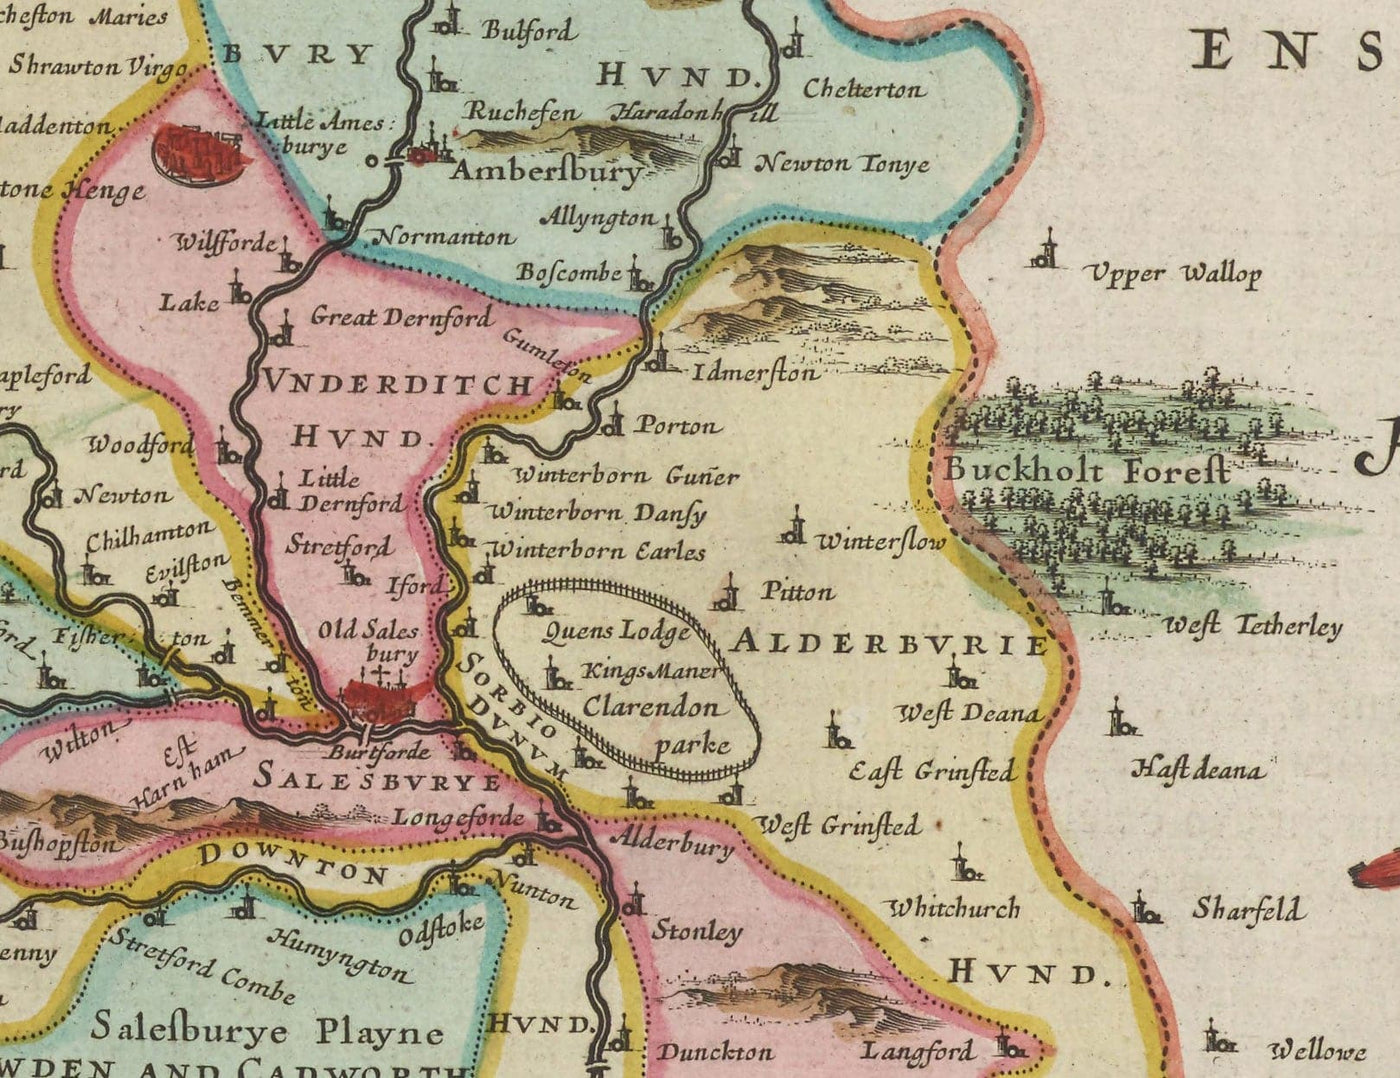 Old Map of Wiltshire in 1665 by Joan Blaeu - Salisbury, Stonehenge, Swindon, Trowbridge, Chippenham, Melksham